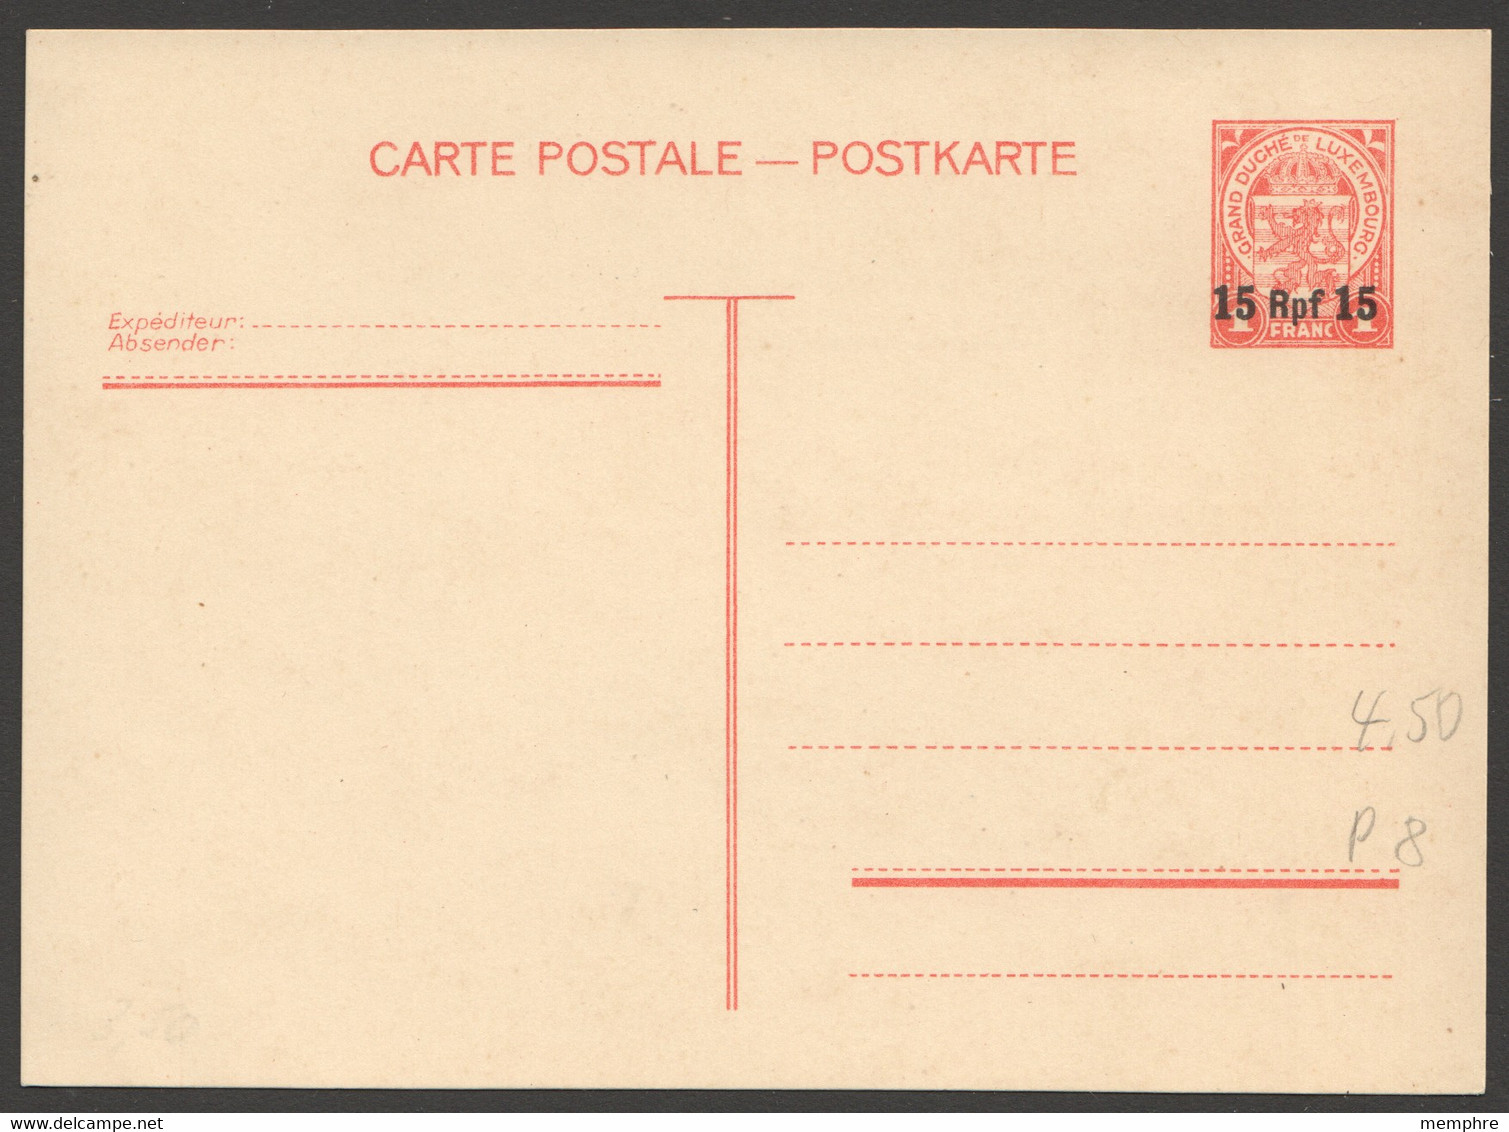 Carte Postale Occupation Allemande  15 Rpf  Non-écrite Prifix P8 - Stamped Stationery